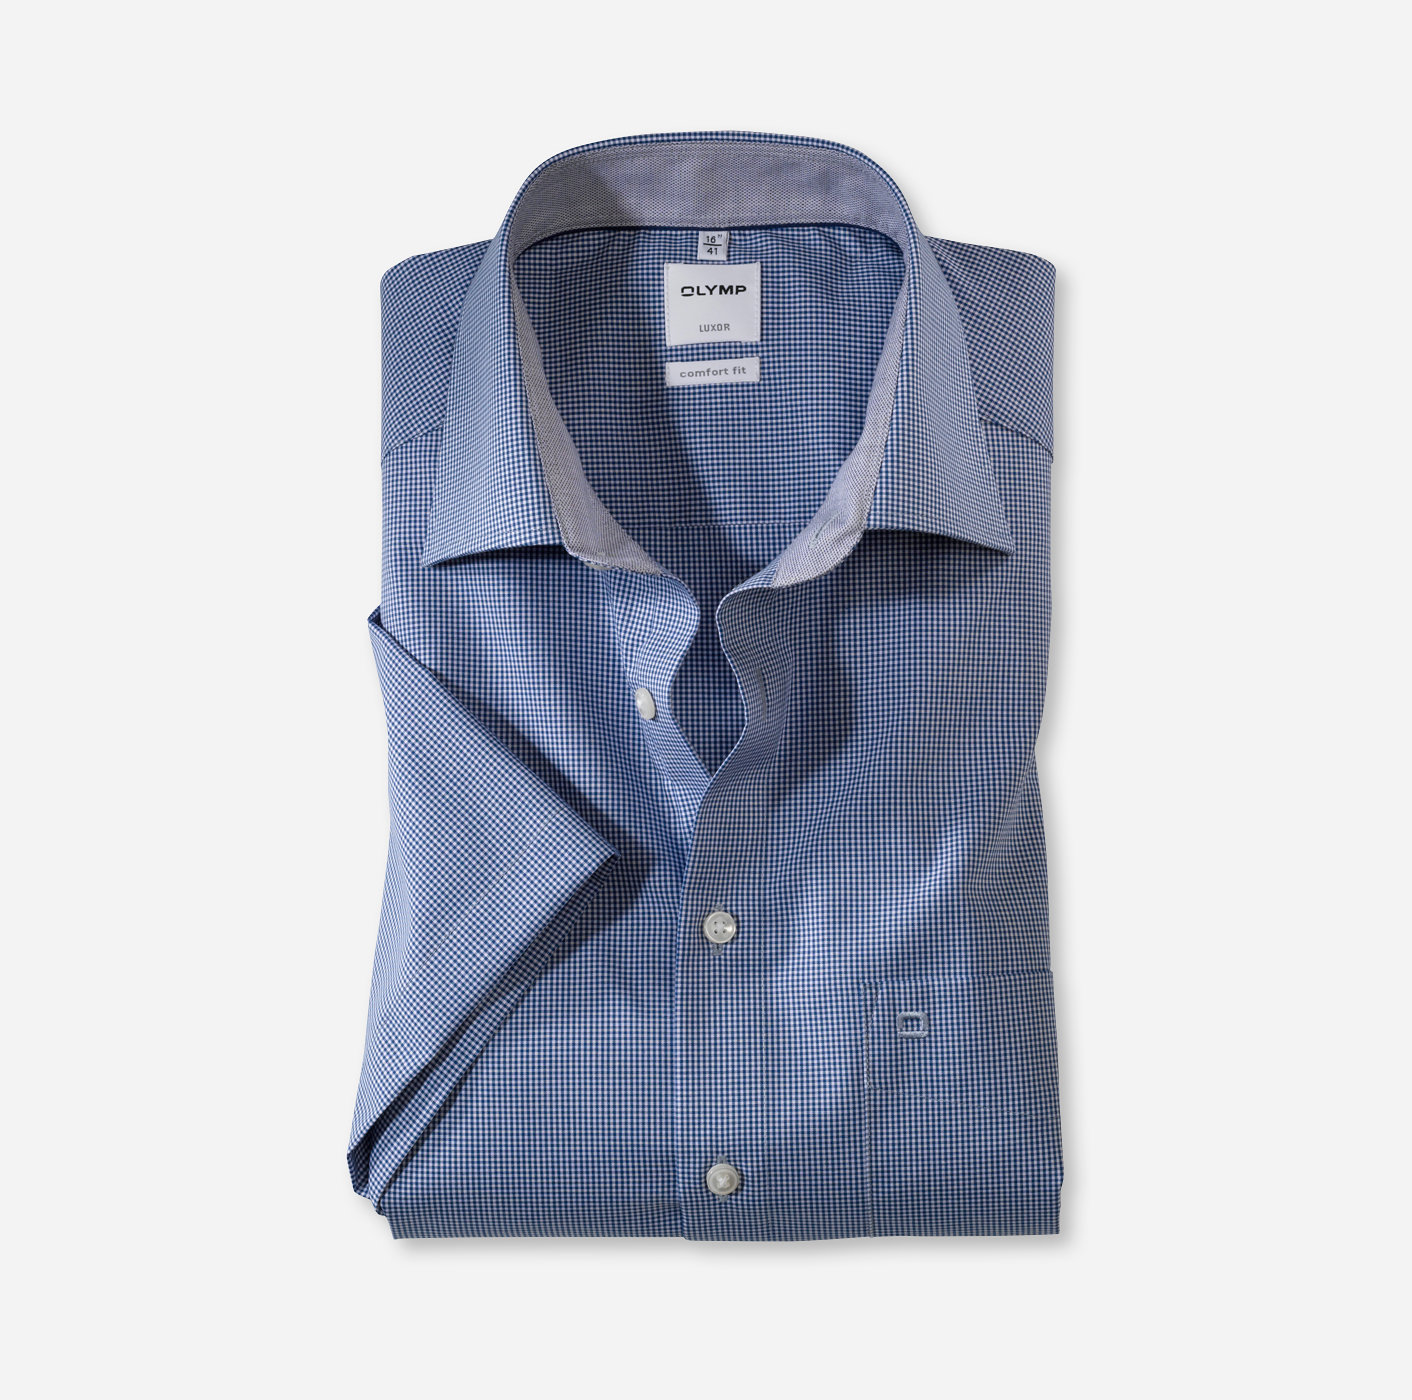 OLYMP Luxor, comfort fit, Business shirt, New Kent, Bleu Roi